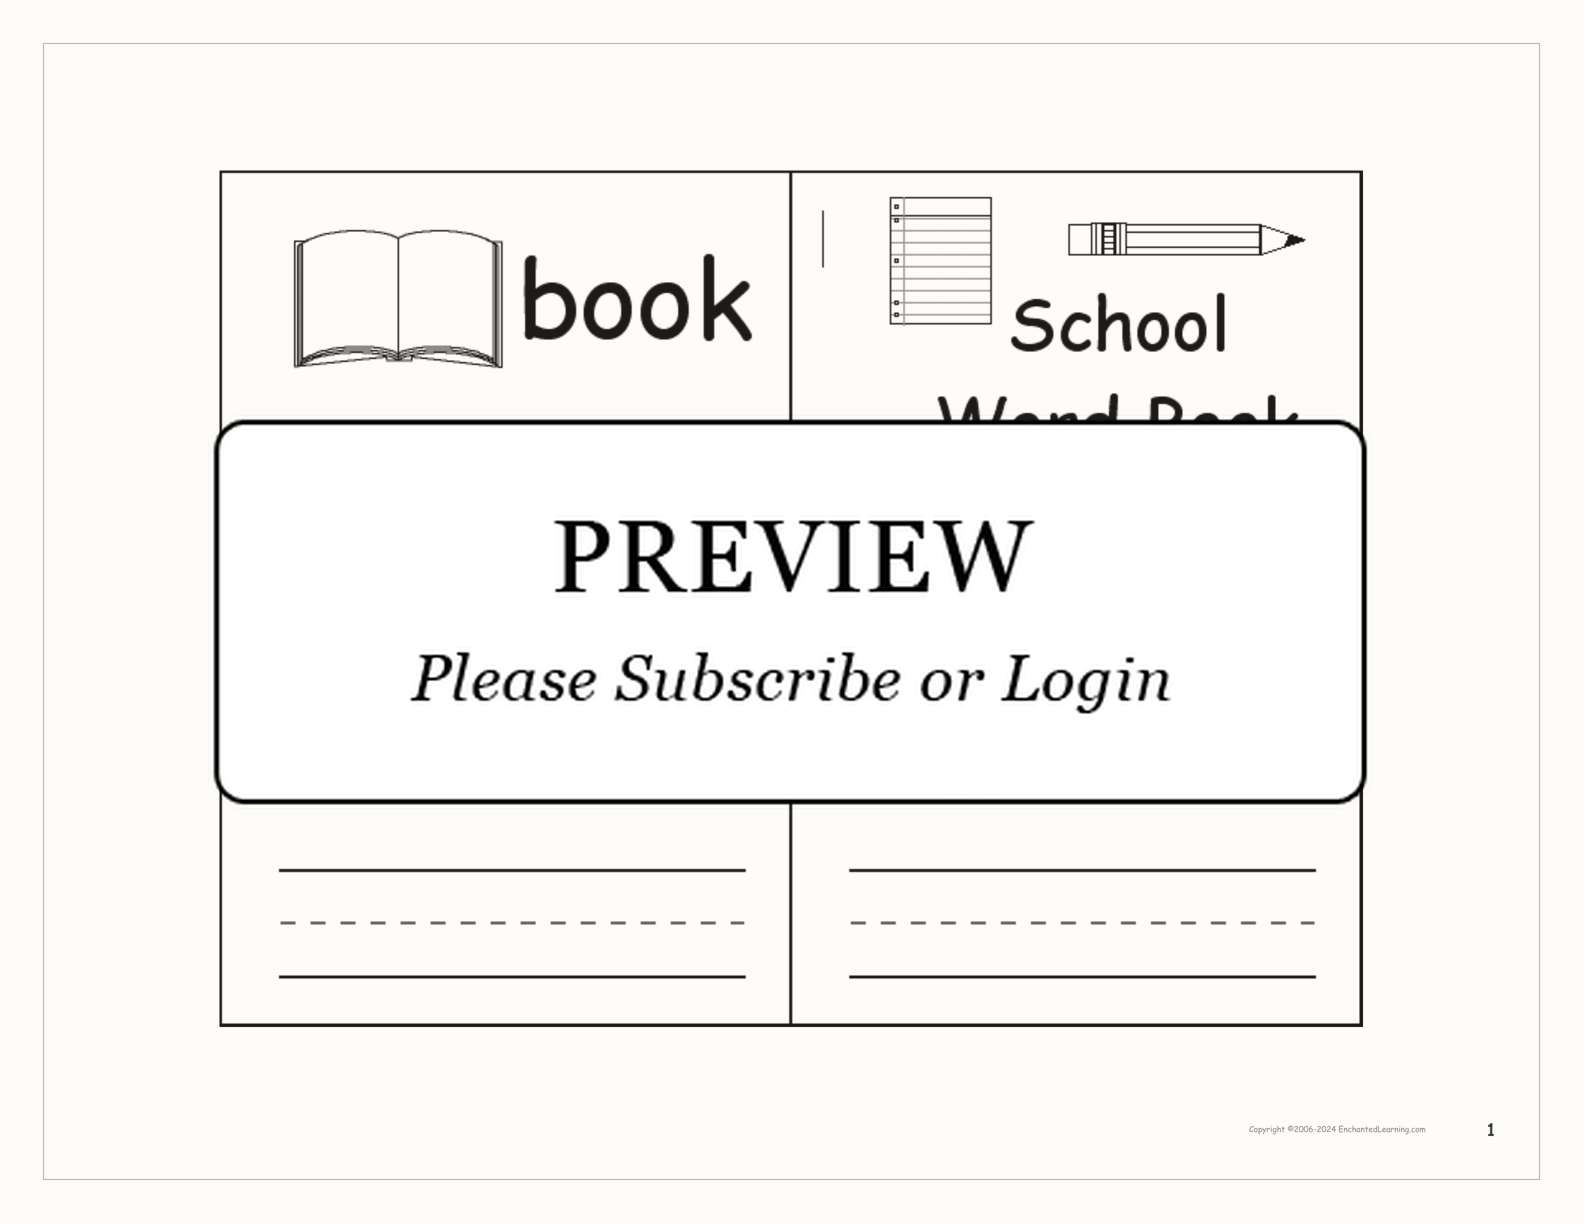 School Word Book interactive printout page 1